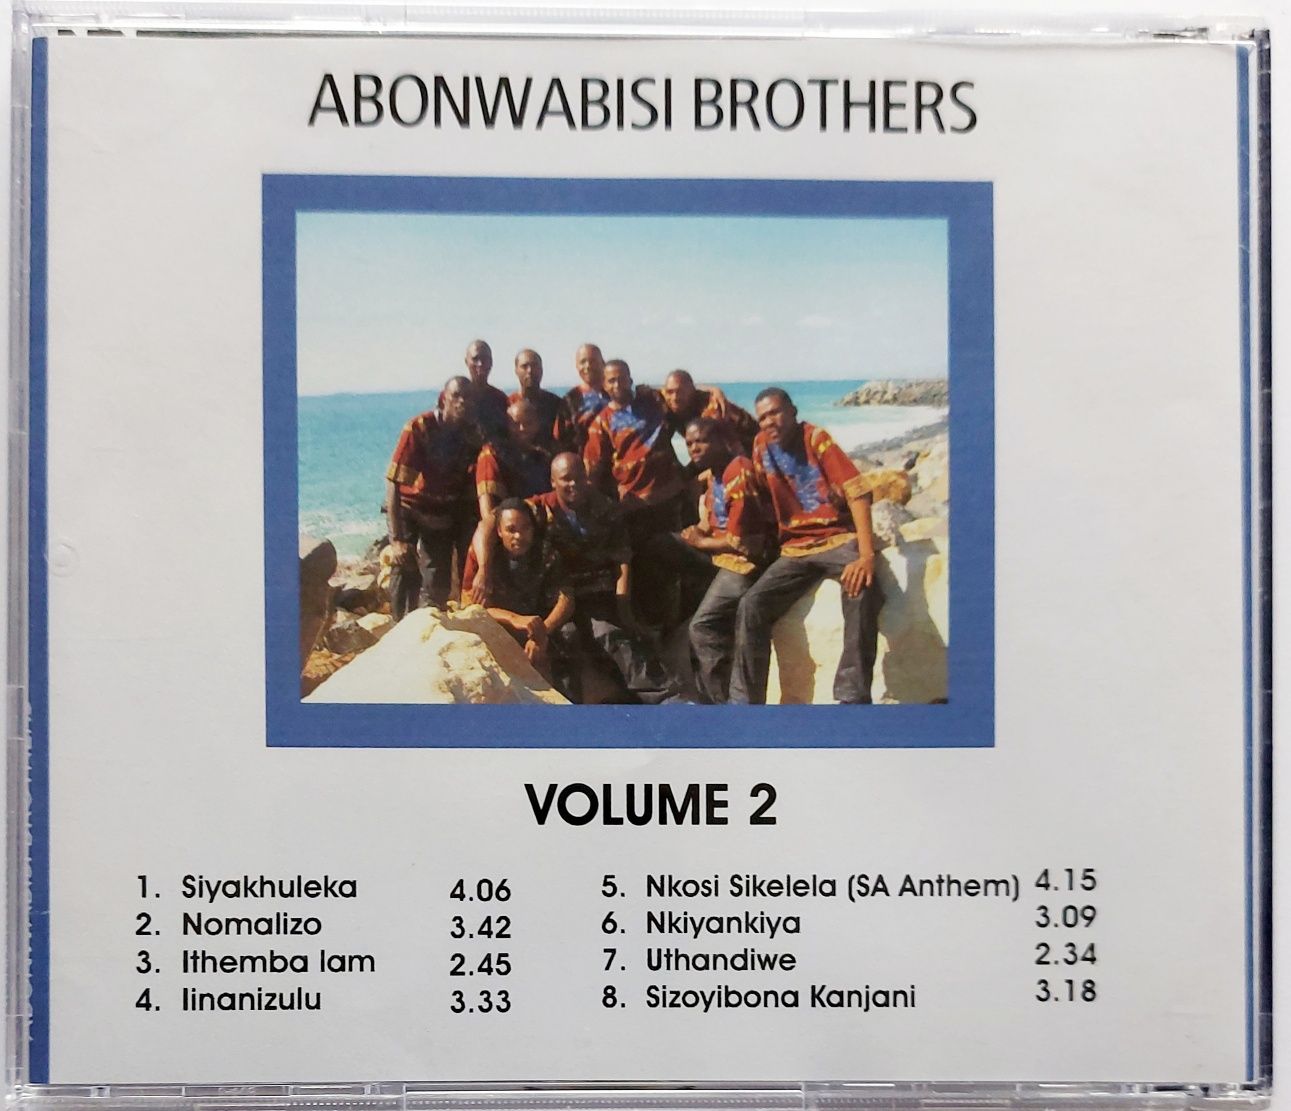 Abonwabisi Brothers vol.2